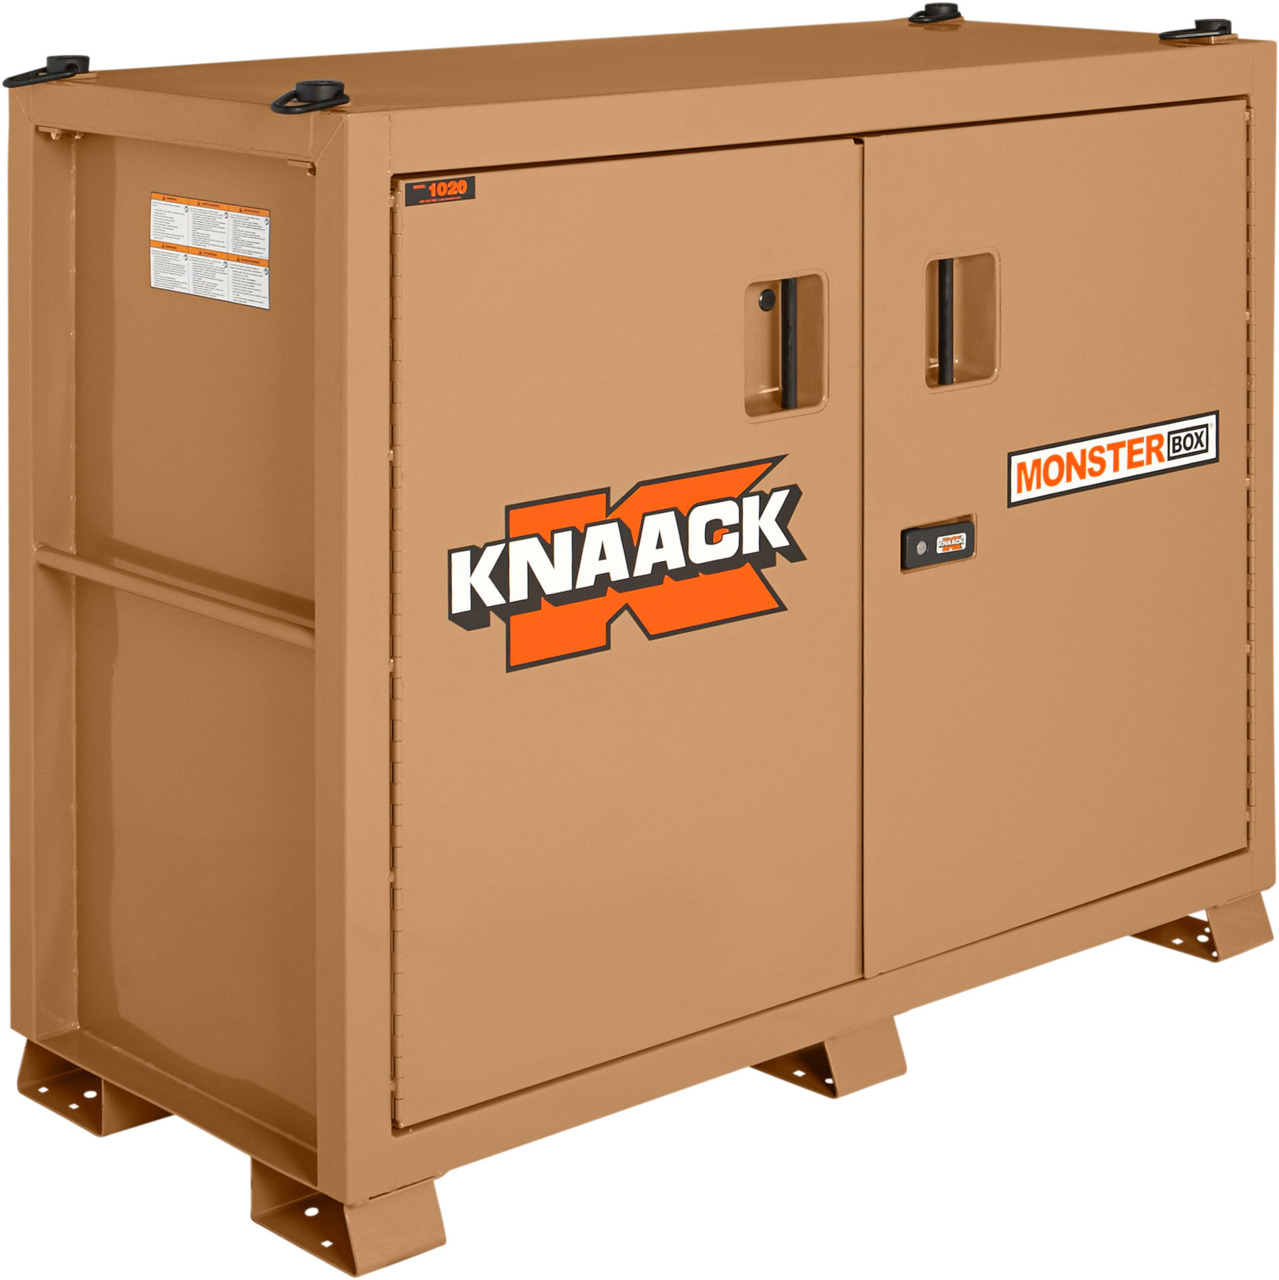 Knaack 52 Cuft Monster Cabinet Box Hd Supply White Cap